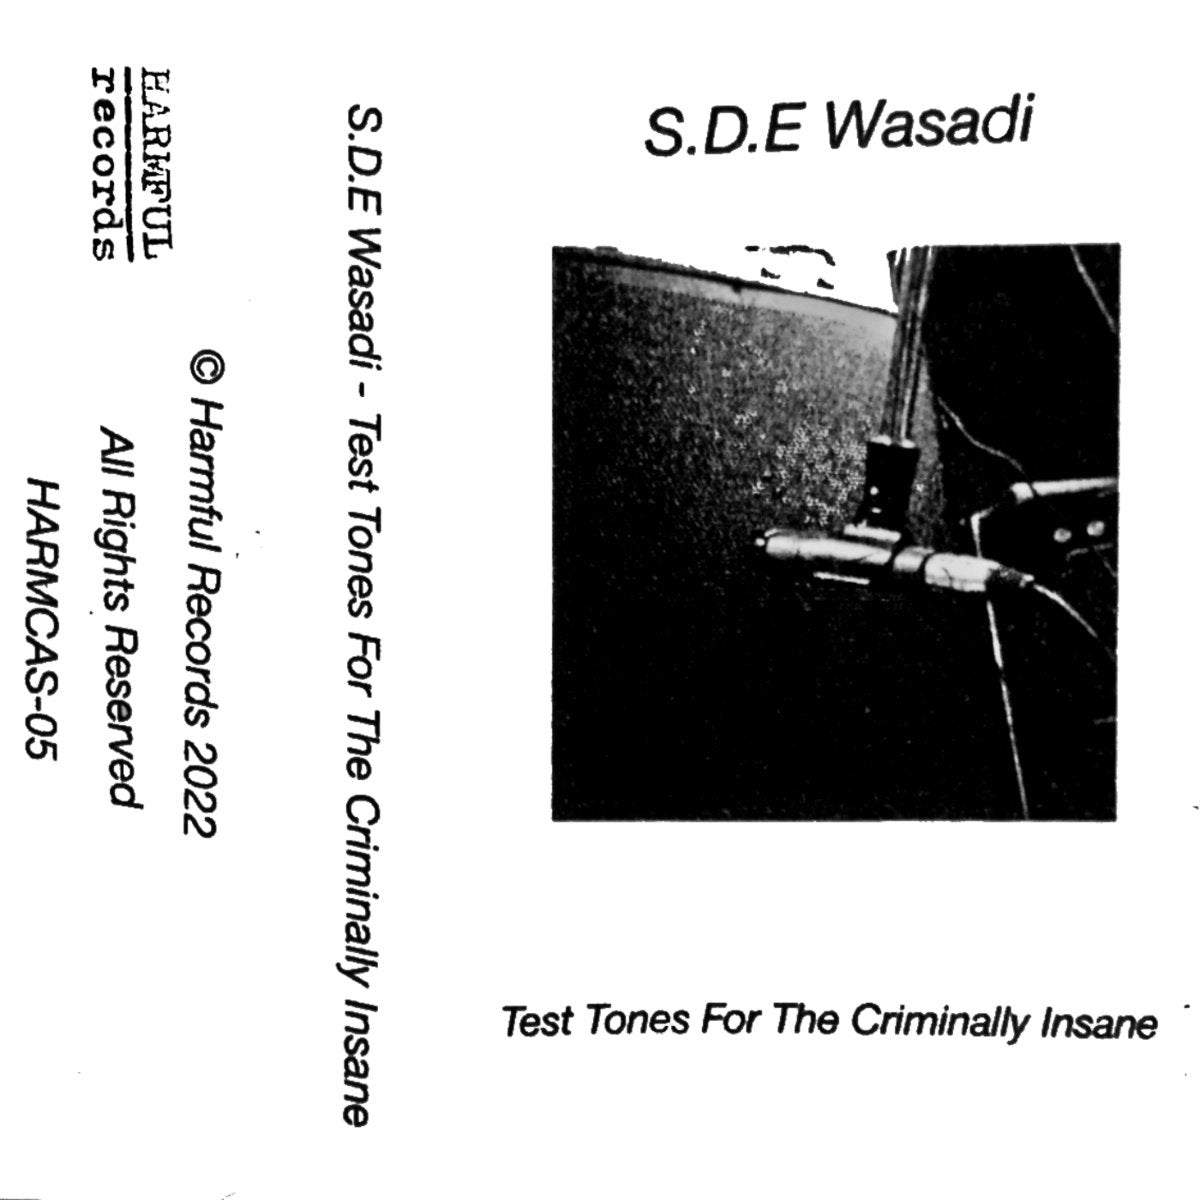 S.D.E Wasadi - Test Tones For The Criminally Insane CS